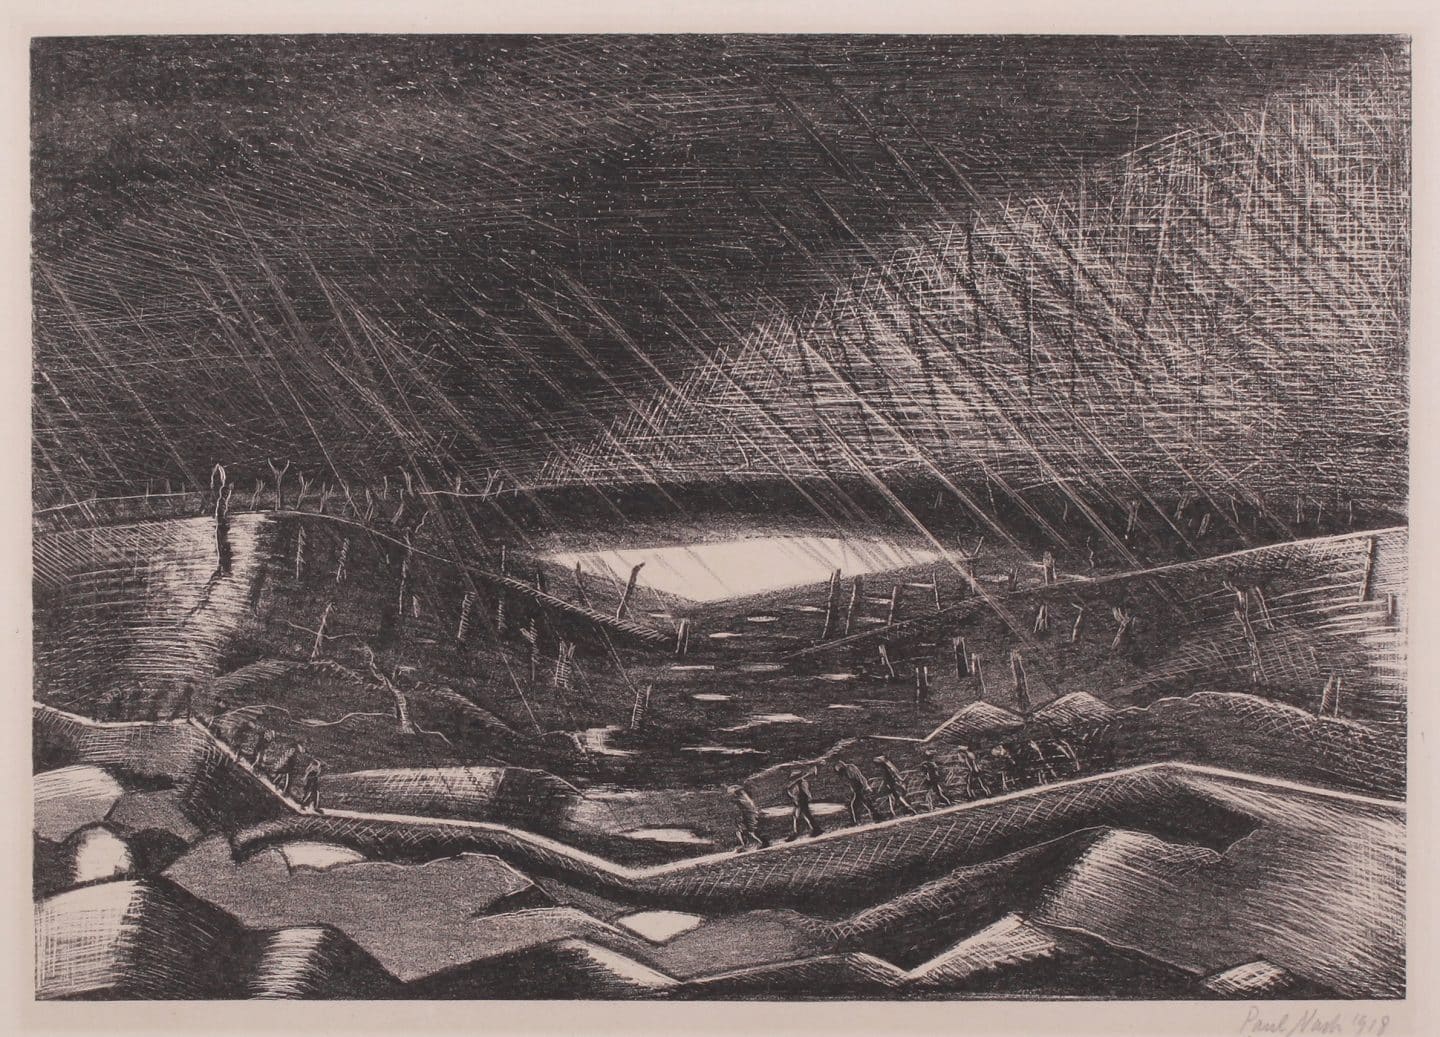 Paul Nash, Rain: Zillebeke Lake, 1918, lithograph on paper. Gift of Simon and Caroline Davis, 2018 (61-002.01). Photo: Bernard Clark